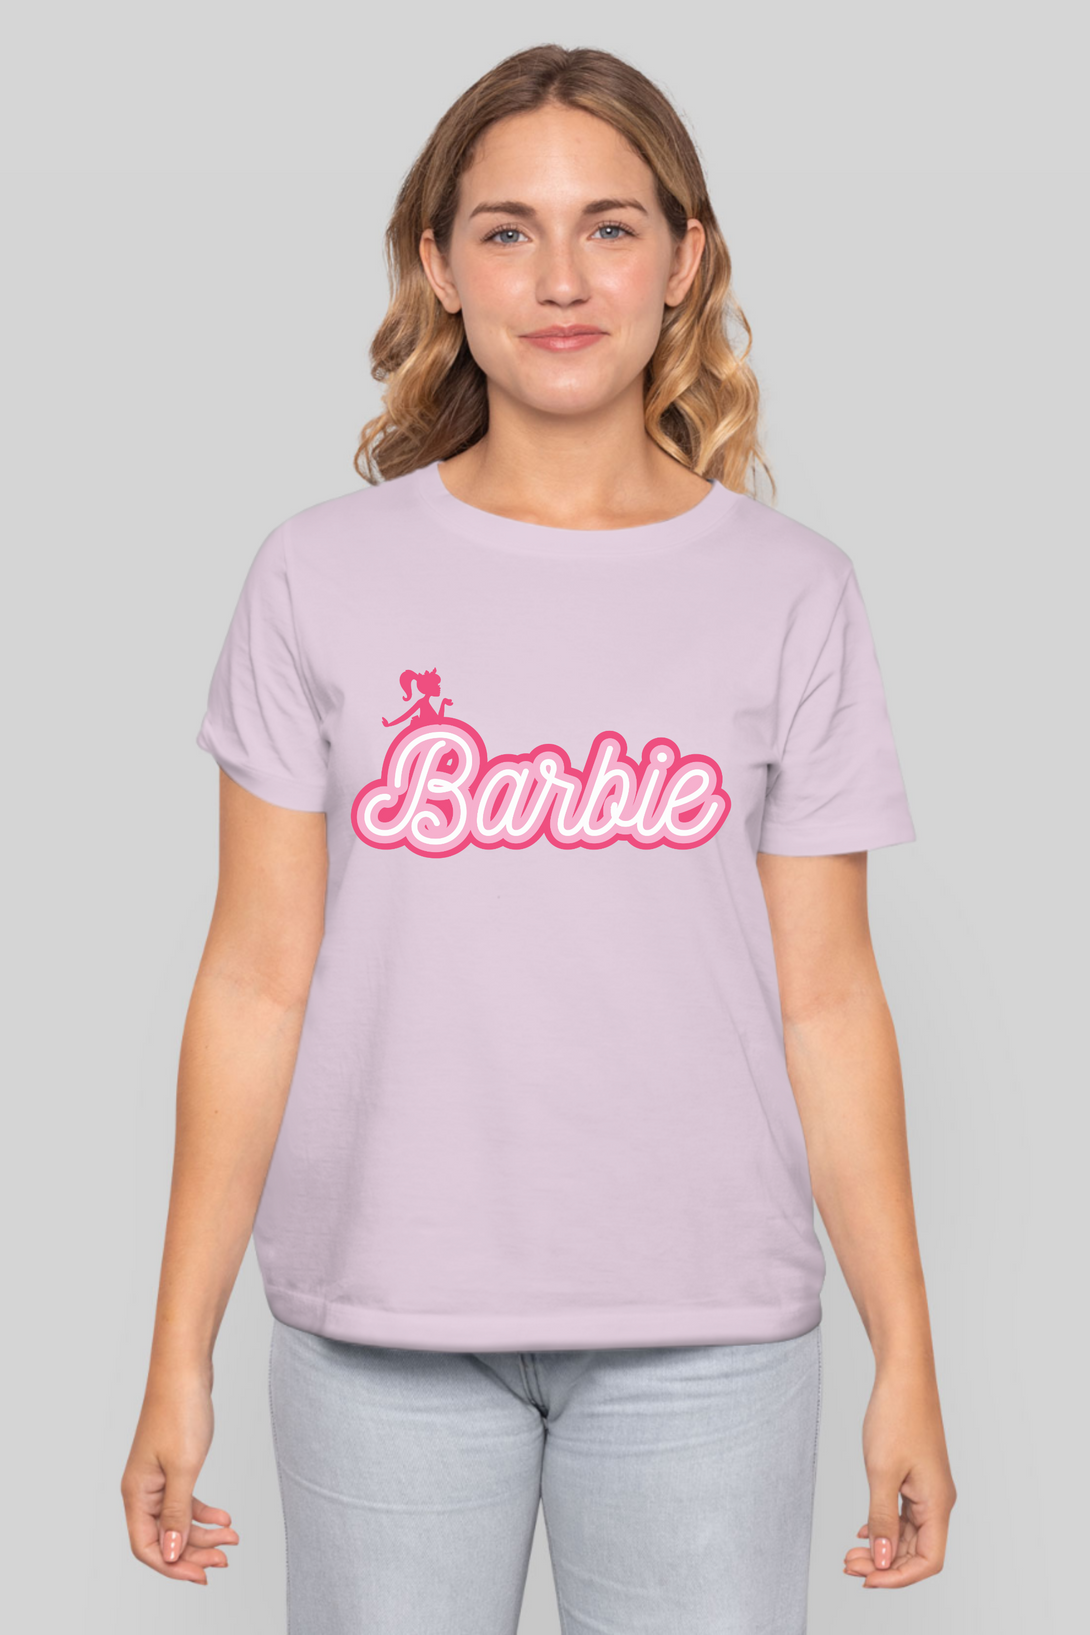 Barbie Printed T-Shirt For Women - WowWaves - 8